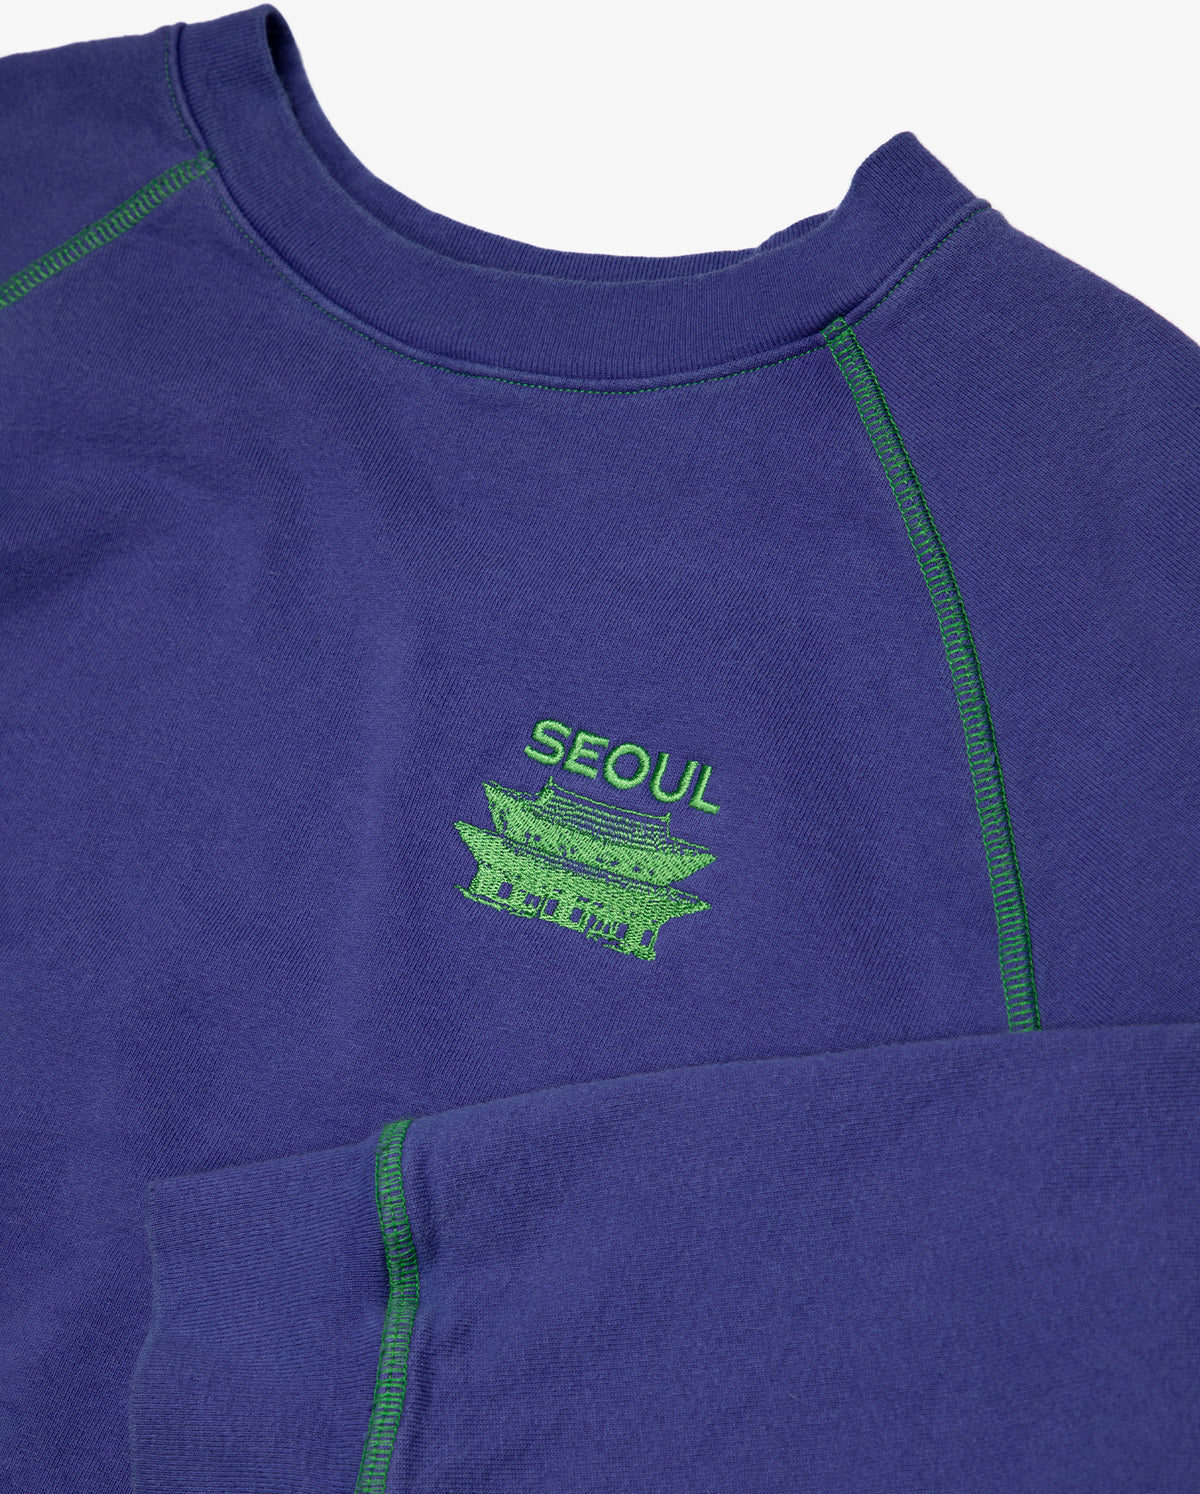 Seoul Tourist Sweatshirt